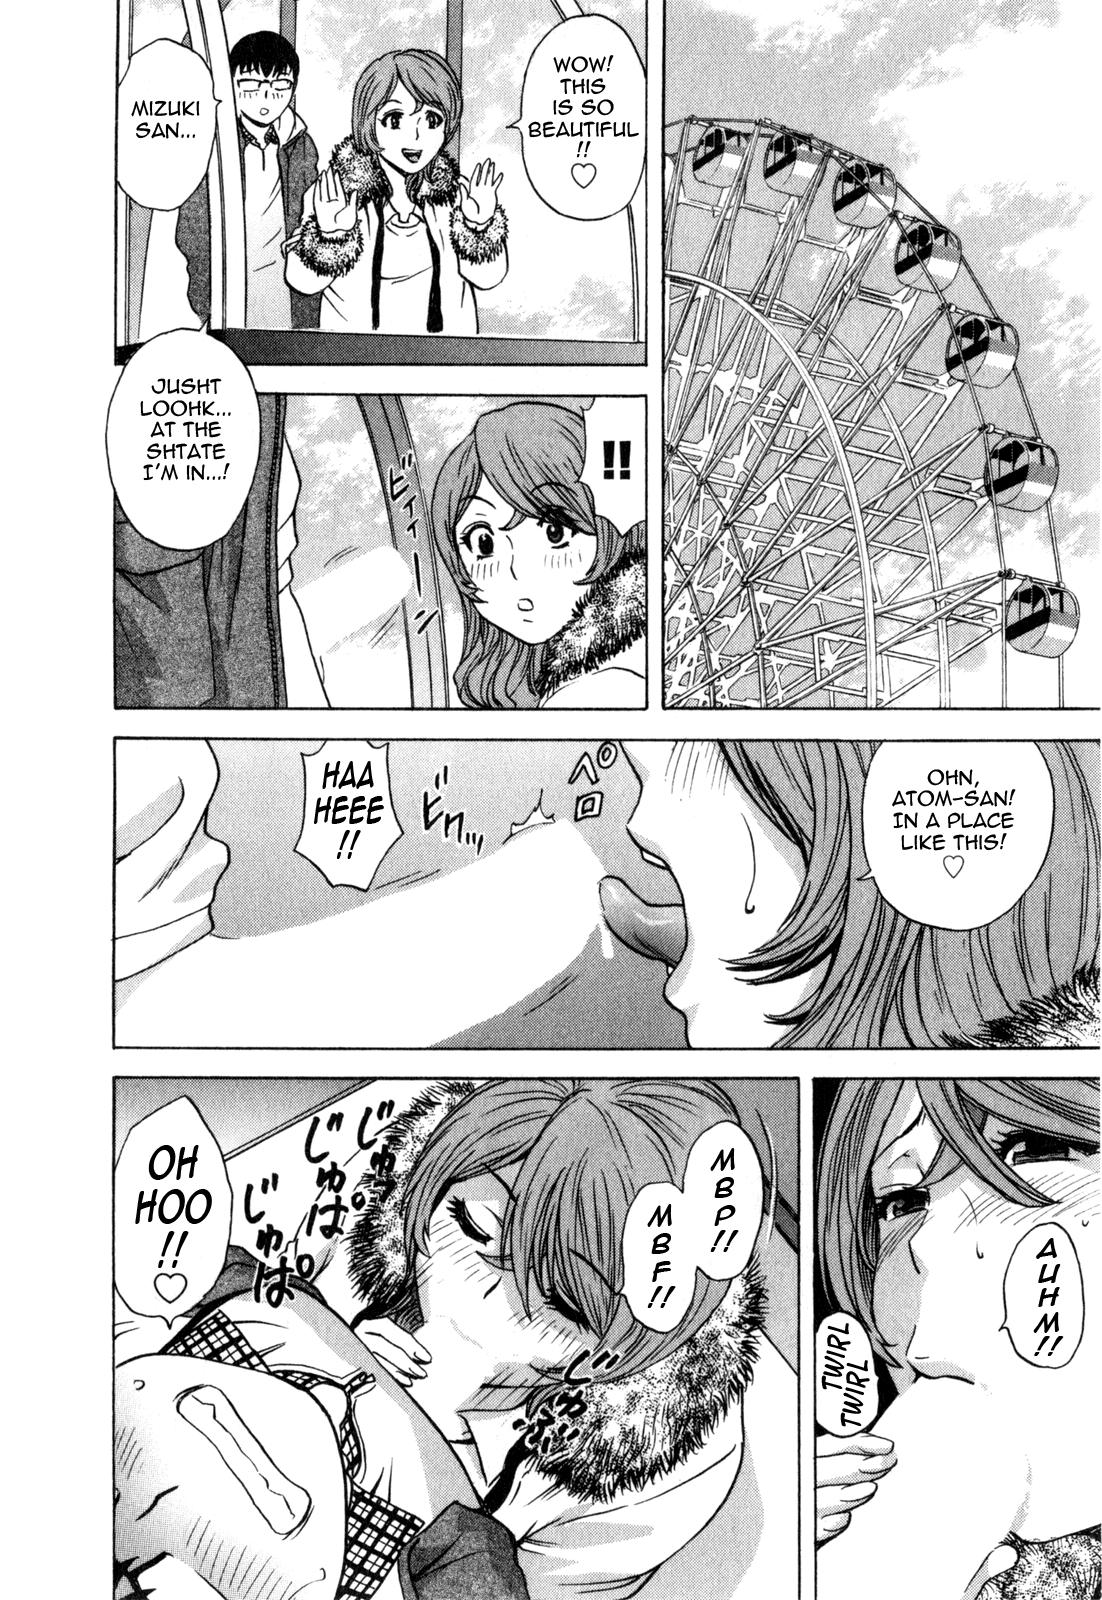 [Hidemaru] Life with Married Women Just Like a Manga 3 - Ch. 1-4 [English] {Tadanohito} 34